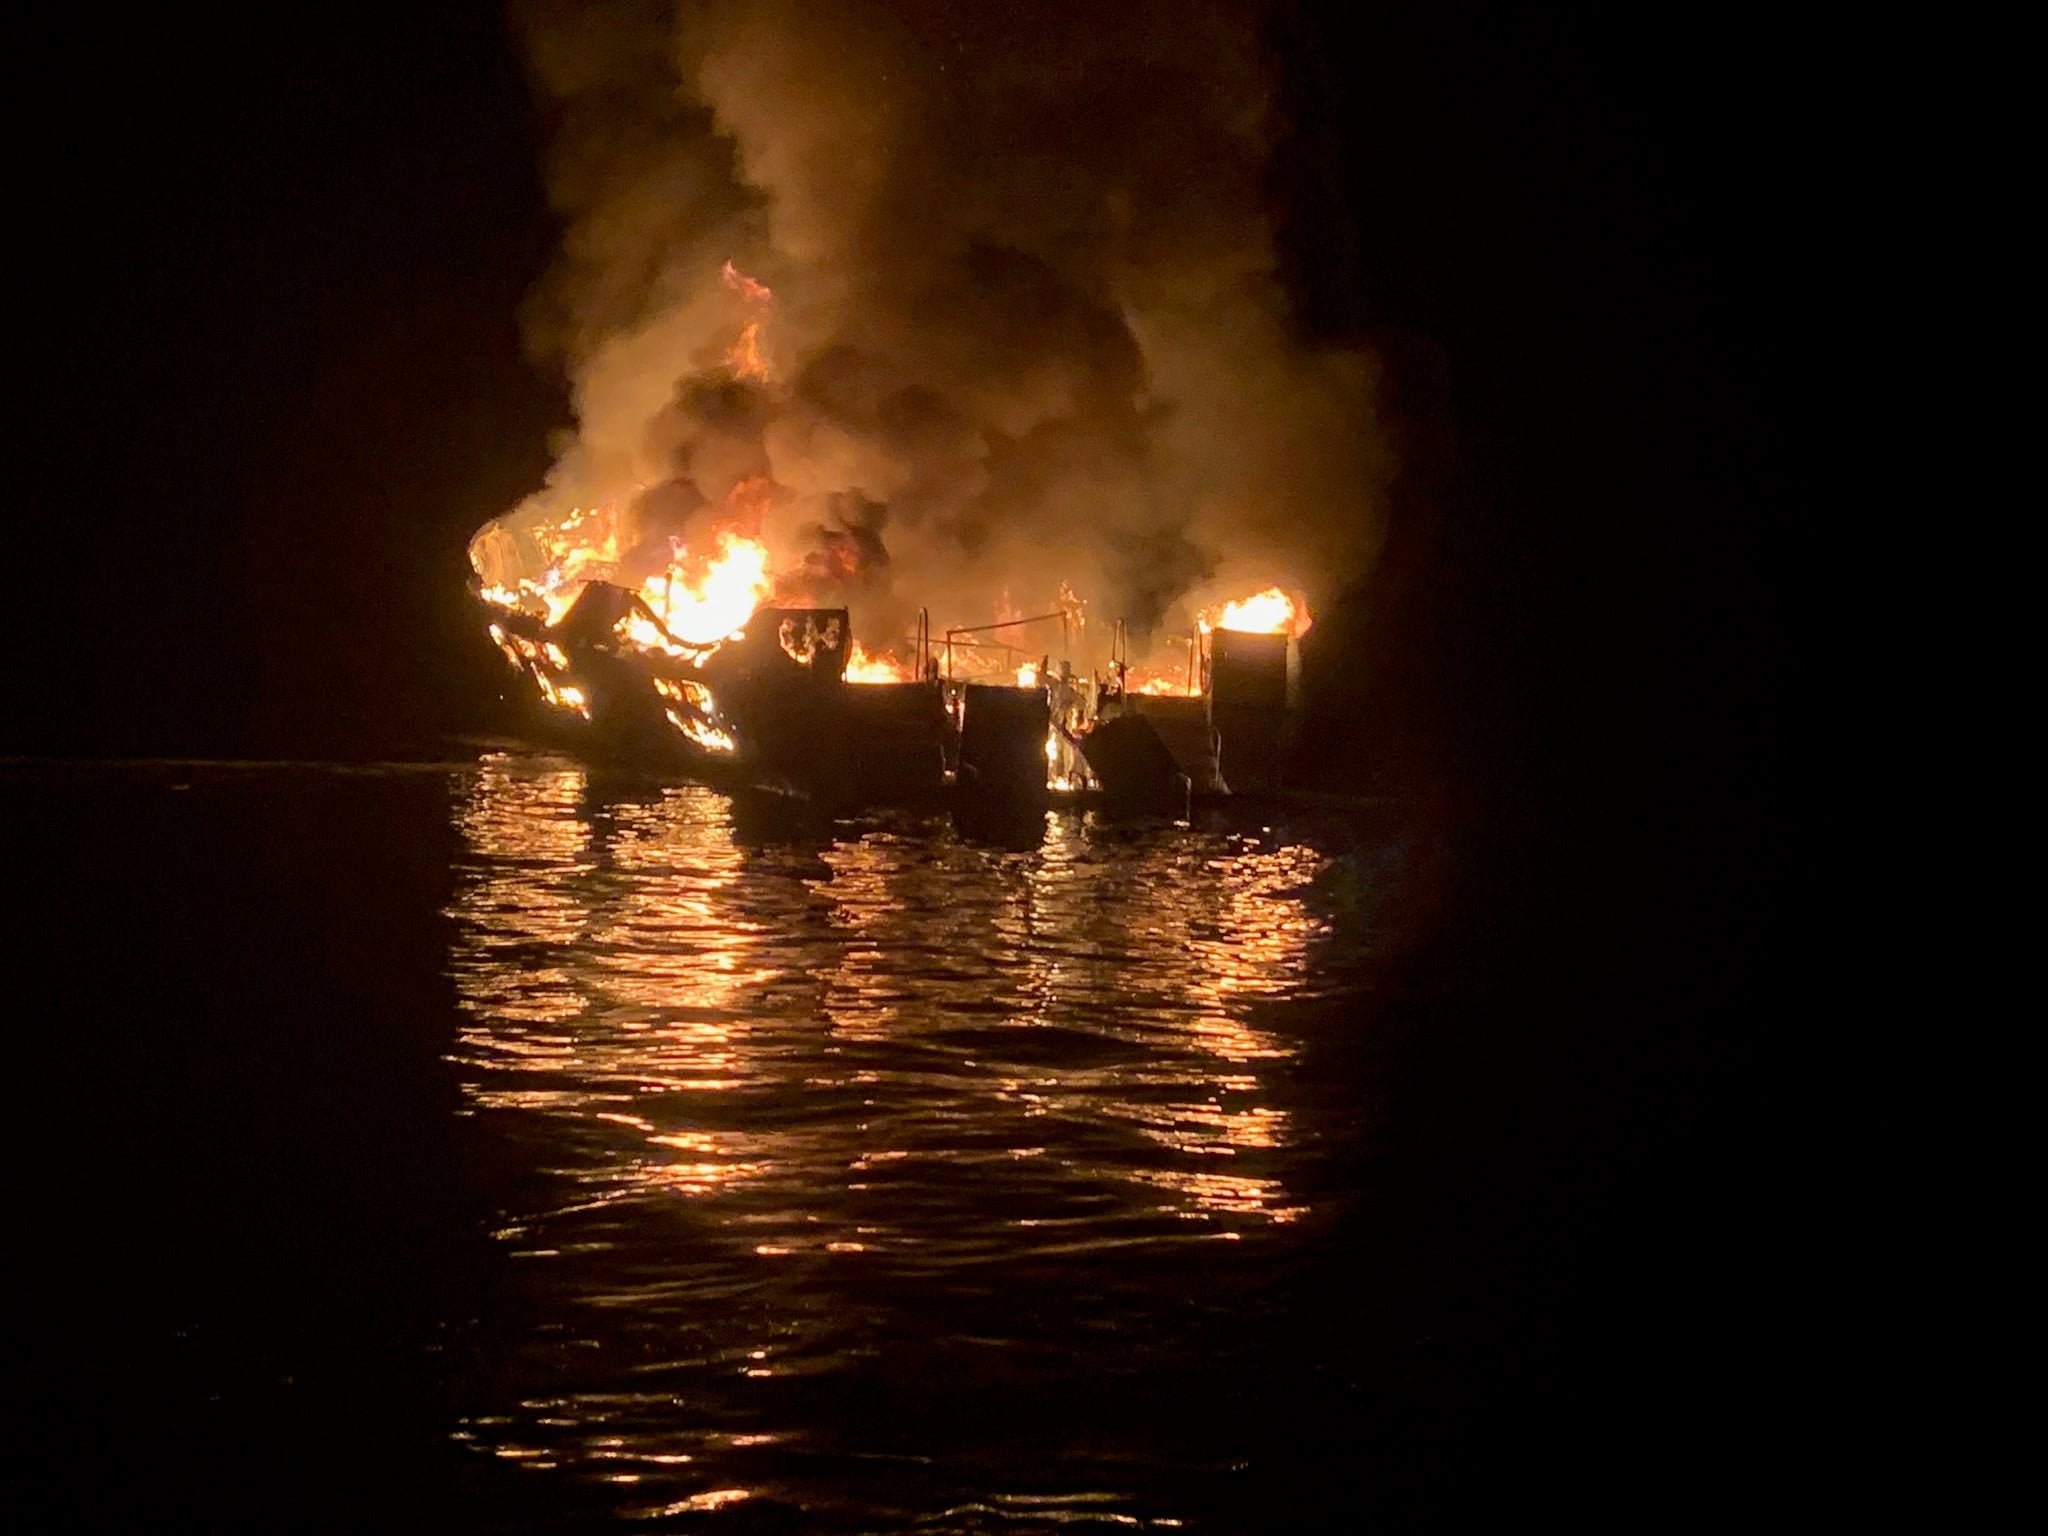 California boat fire: six crew members were asleep when fatal blaze erupted, report finds